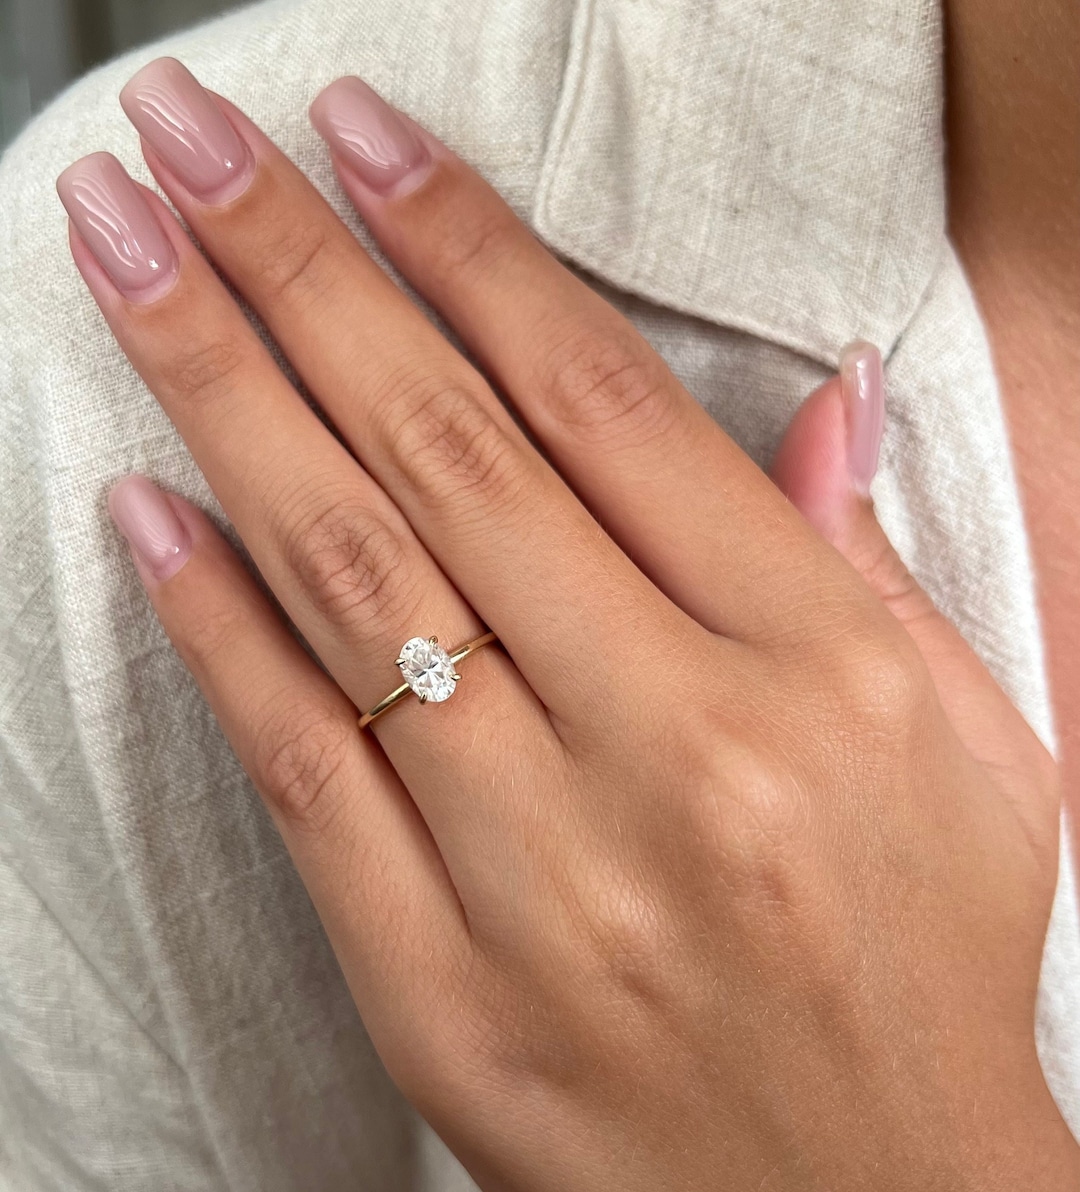 Buy Minimalist Diamond Engagement Ring Online